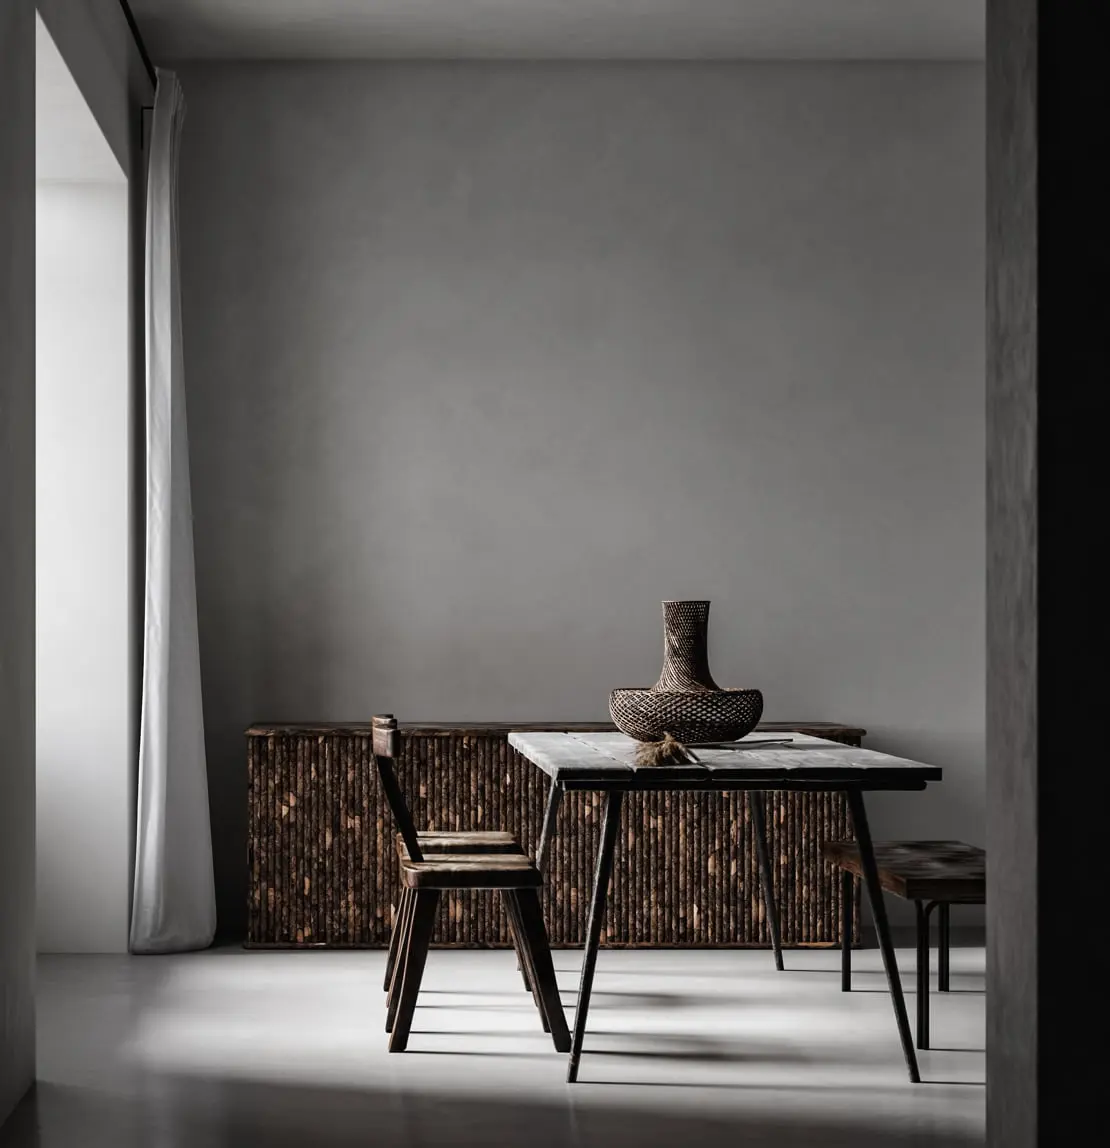 Pared de microcemento en un salón minimalista decorado con tonos grises